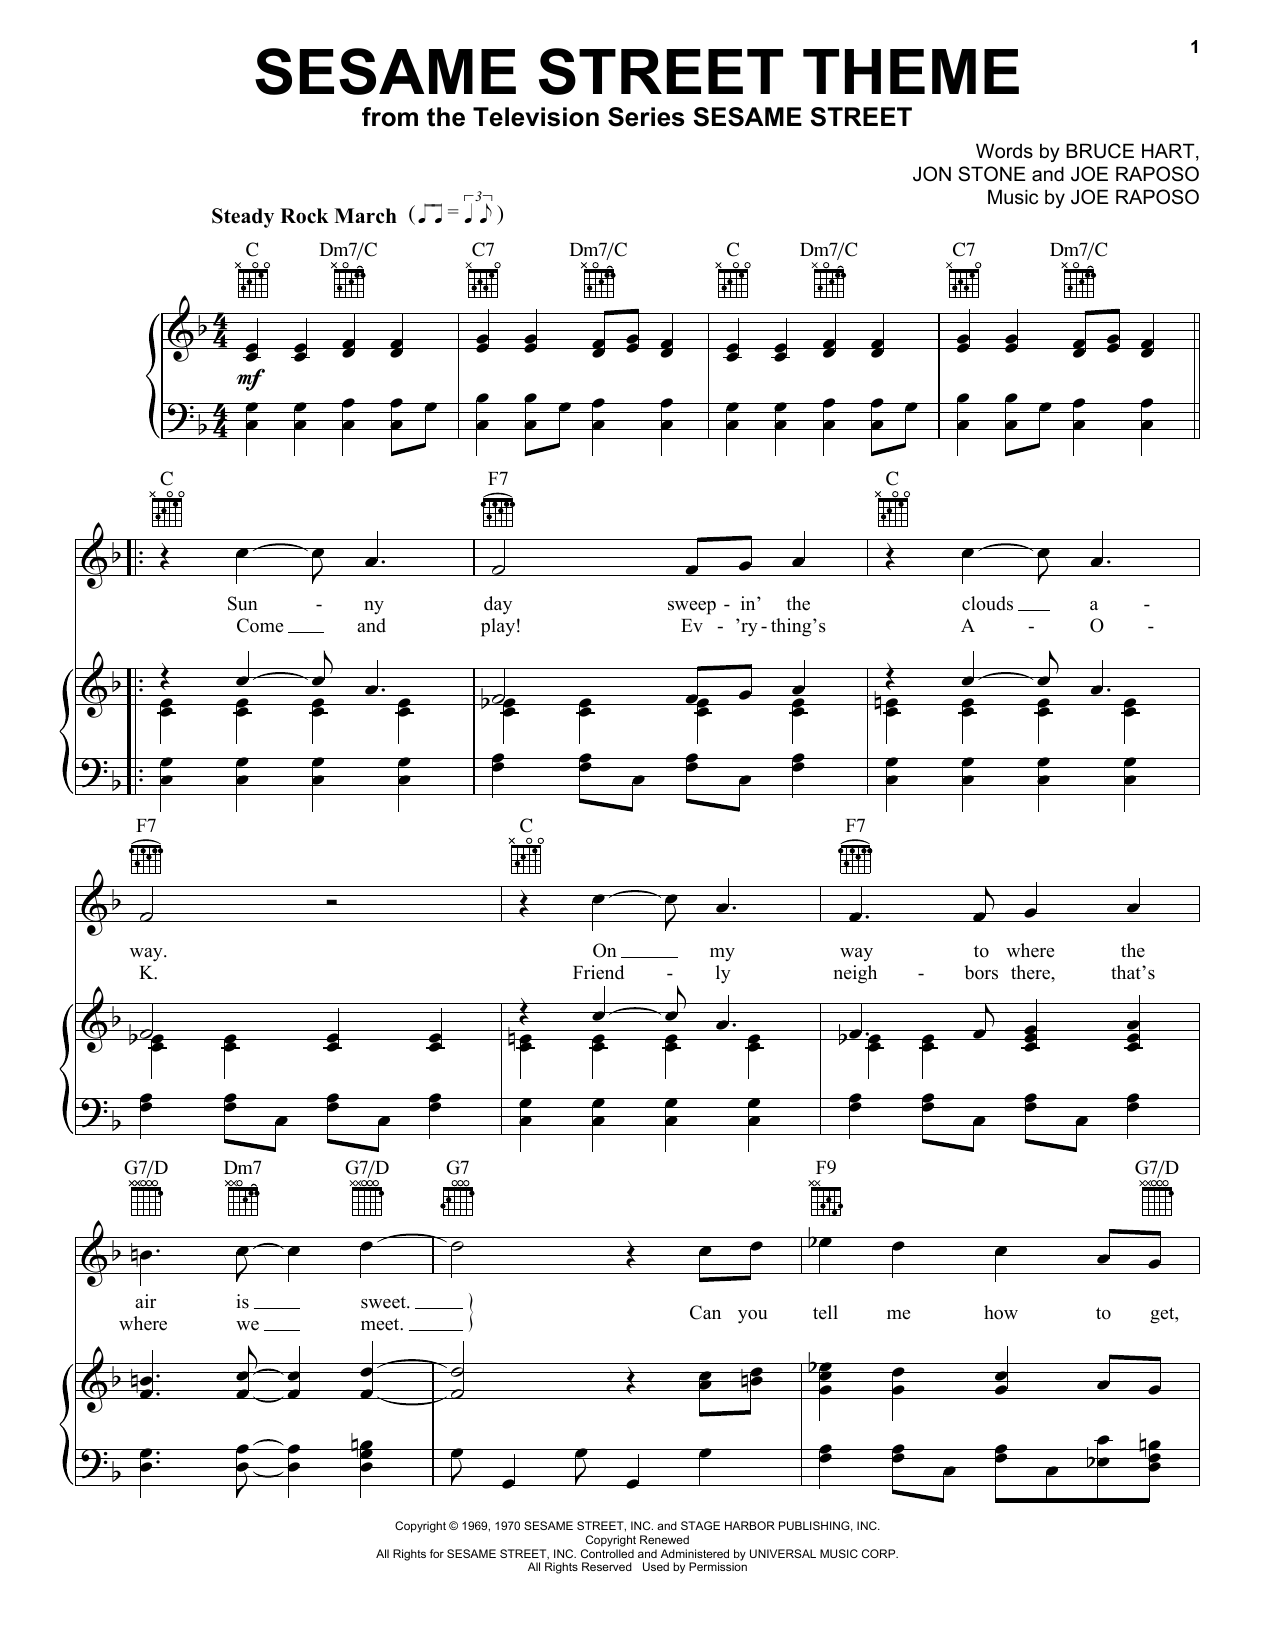 Download Joe Raposo Sesame Street Theme Sheet Music and learn how to play Ukulele PDF digital score in minutes